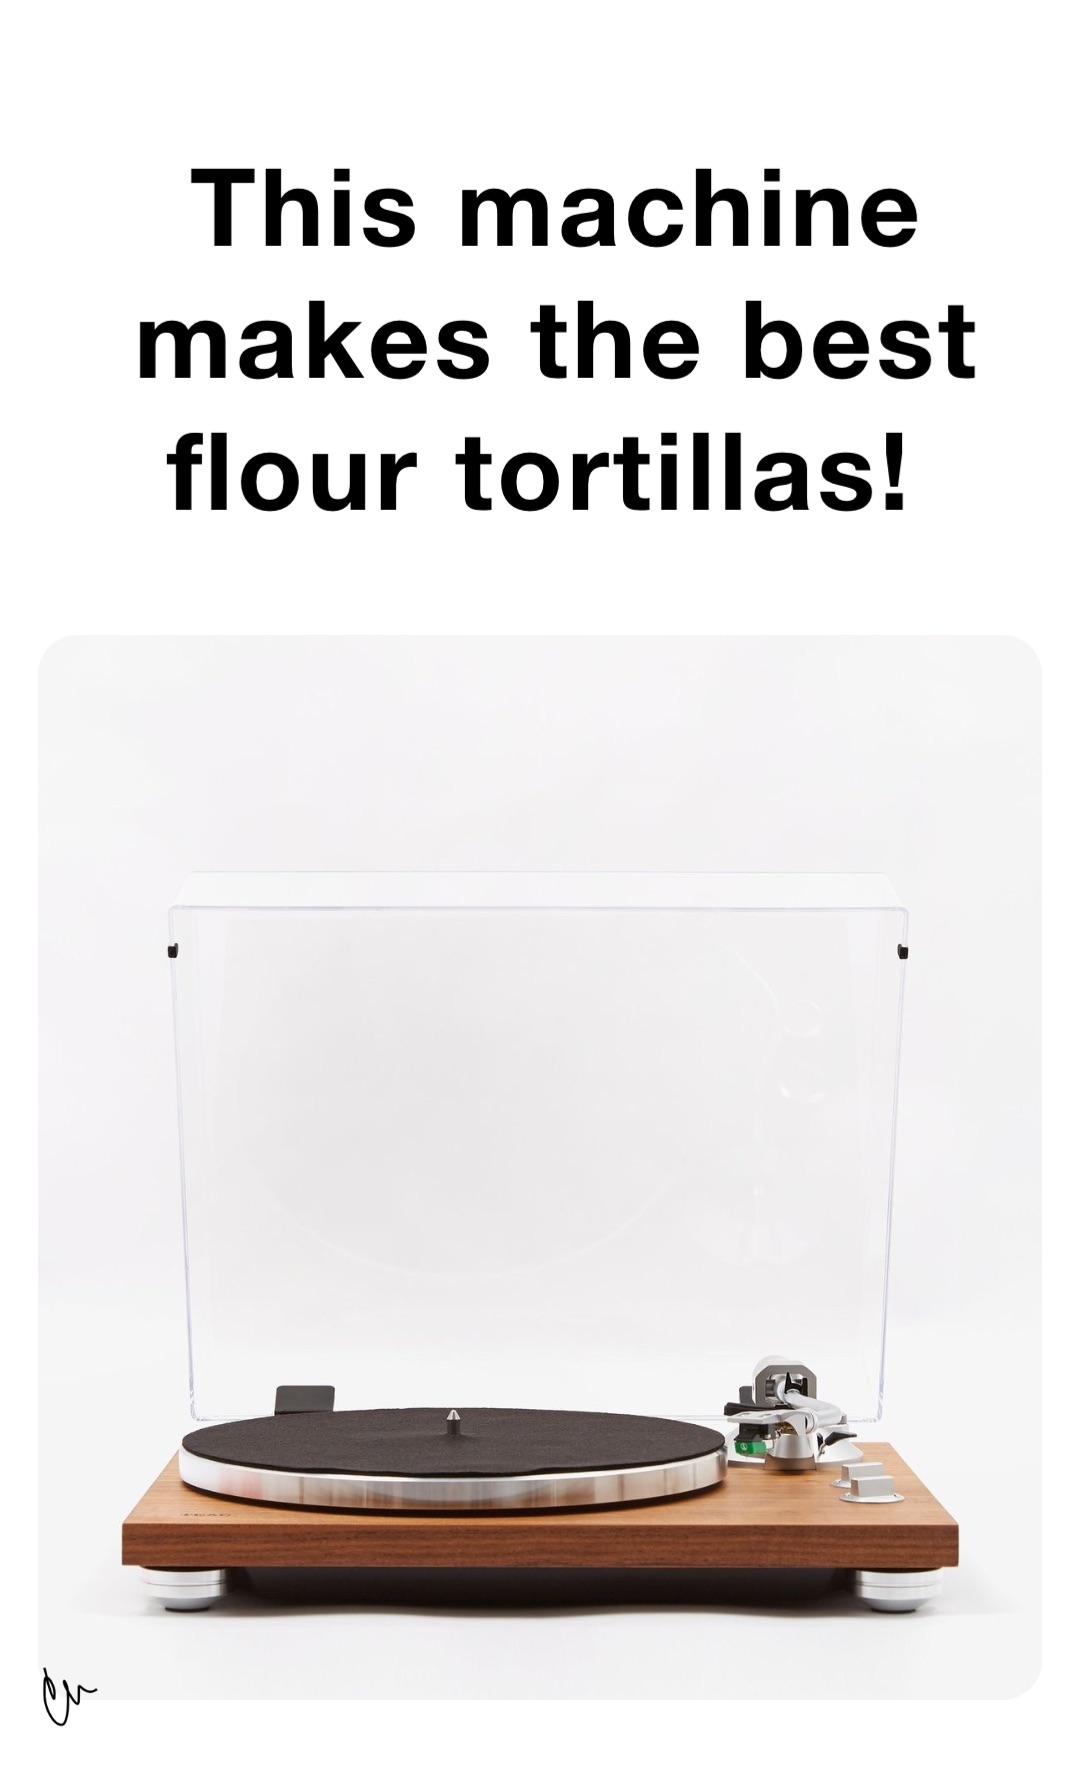 This machine makes the best flour tortillas!